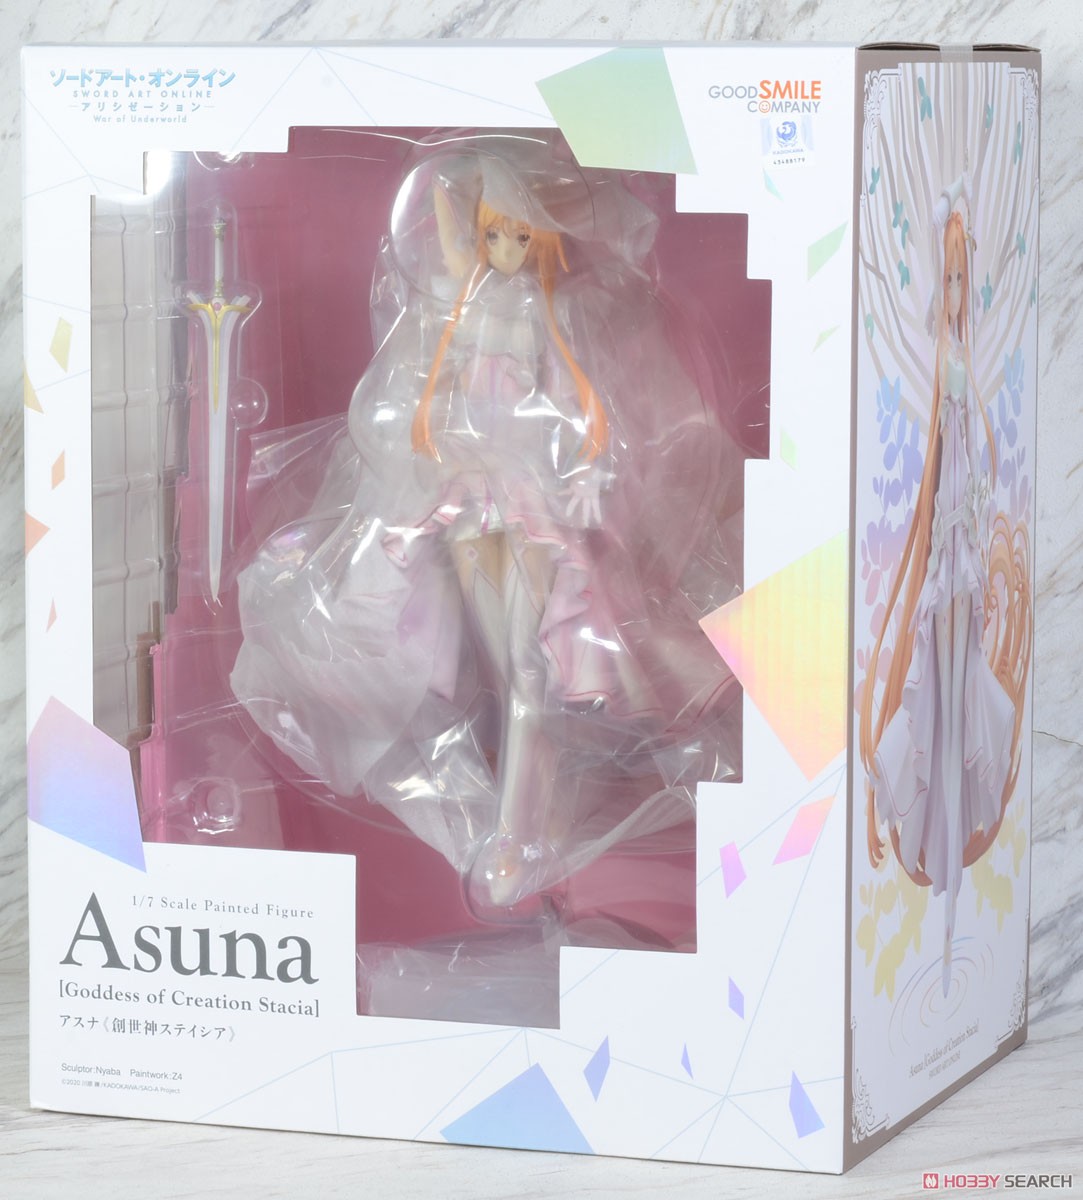 Asuna [Stacia, the Goddess of Creation] (PVC Figure) Package1